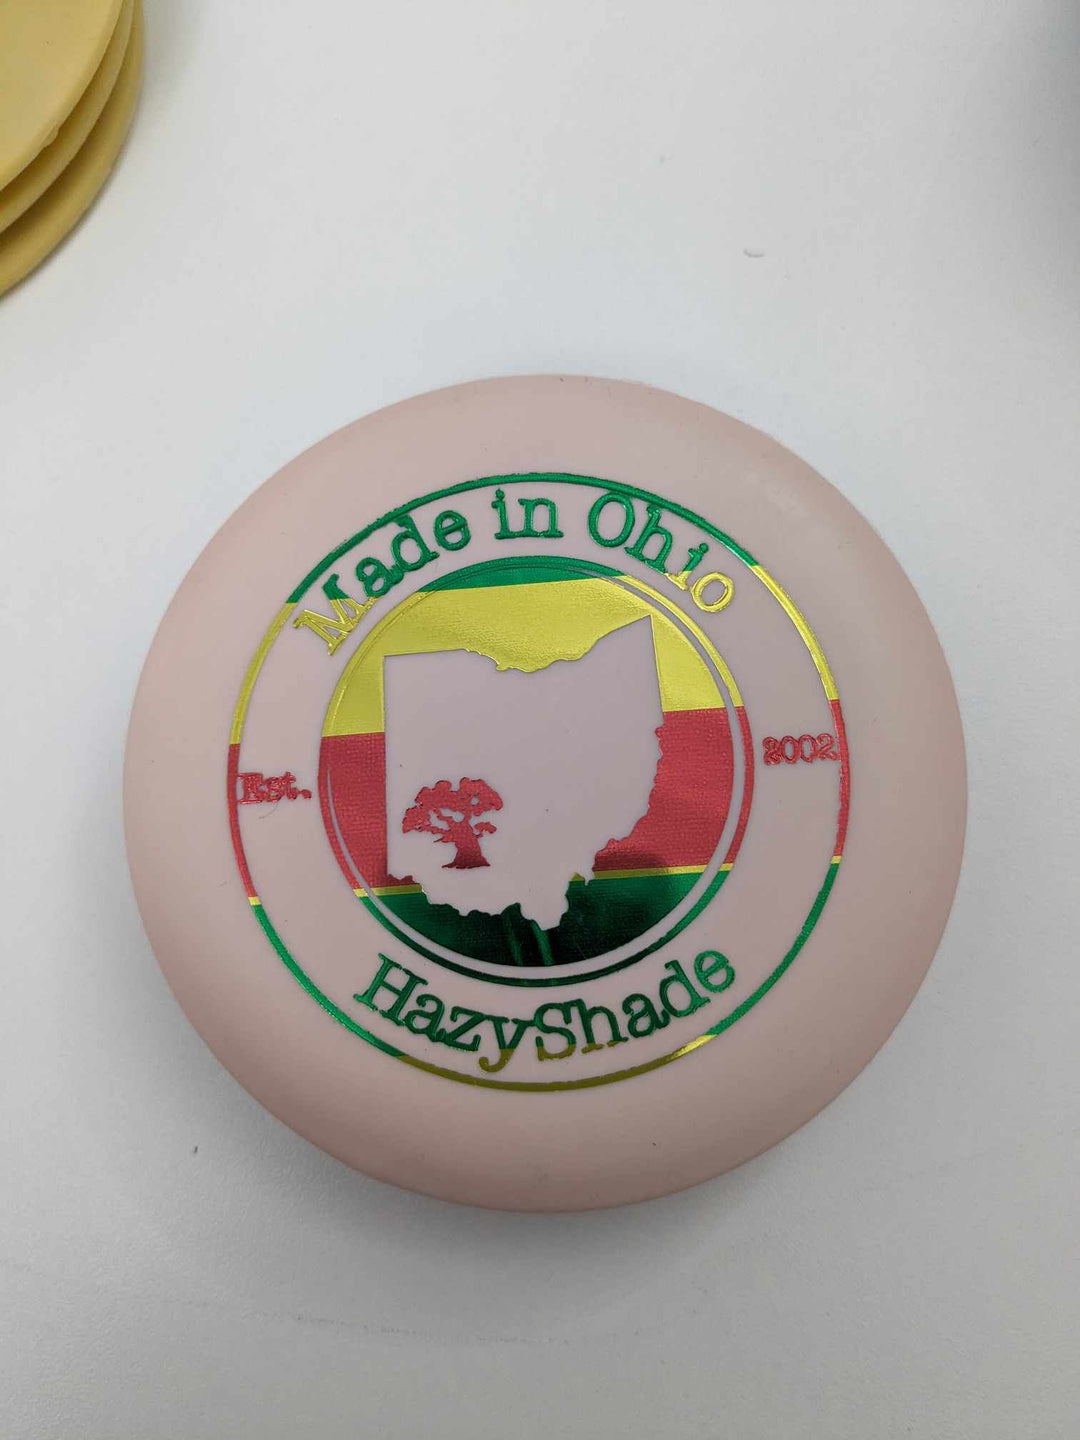 Hazy Made in Ohio Pie Pan Spire Tart Mini